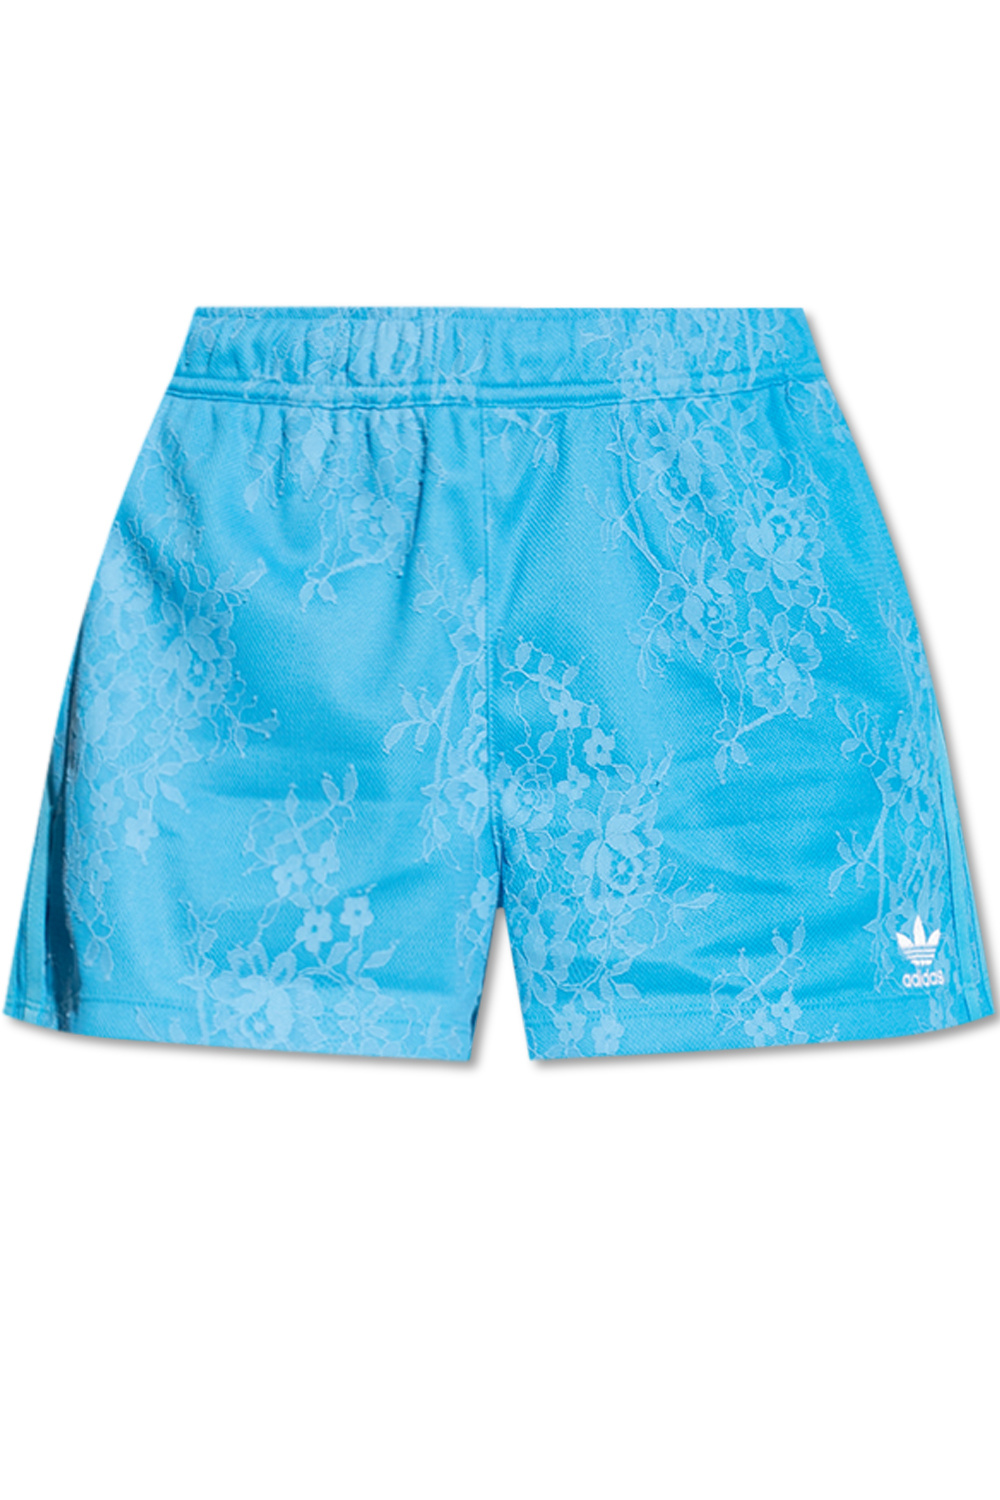 Aqua Blue Lace Detail Shorts Size 3 Small Summer Travel Booty Shorts